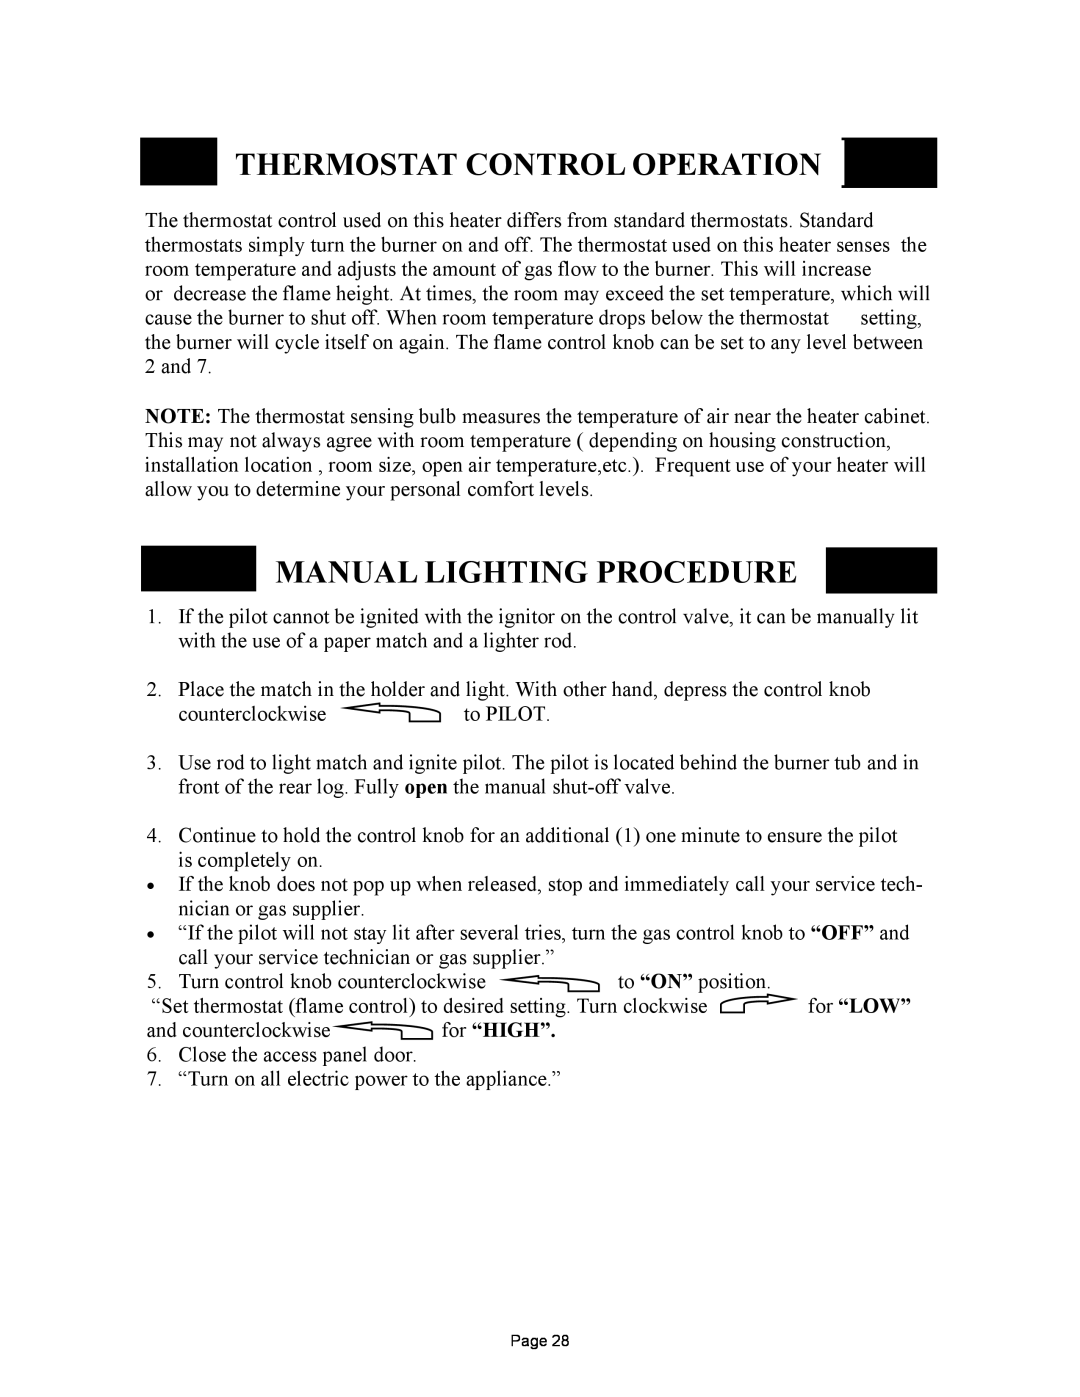 New Buck Corporation MODEL FP-327-ZC manual Thermostat Control Operation, Manual Lighting Procedure 